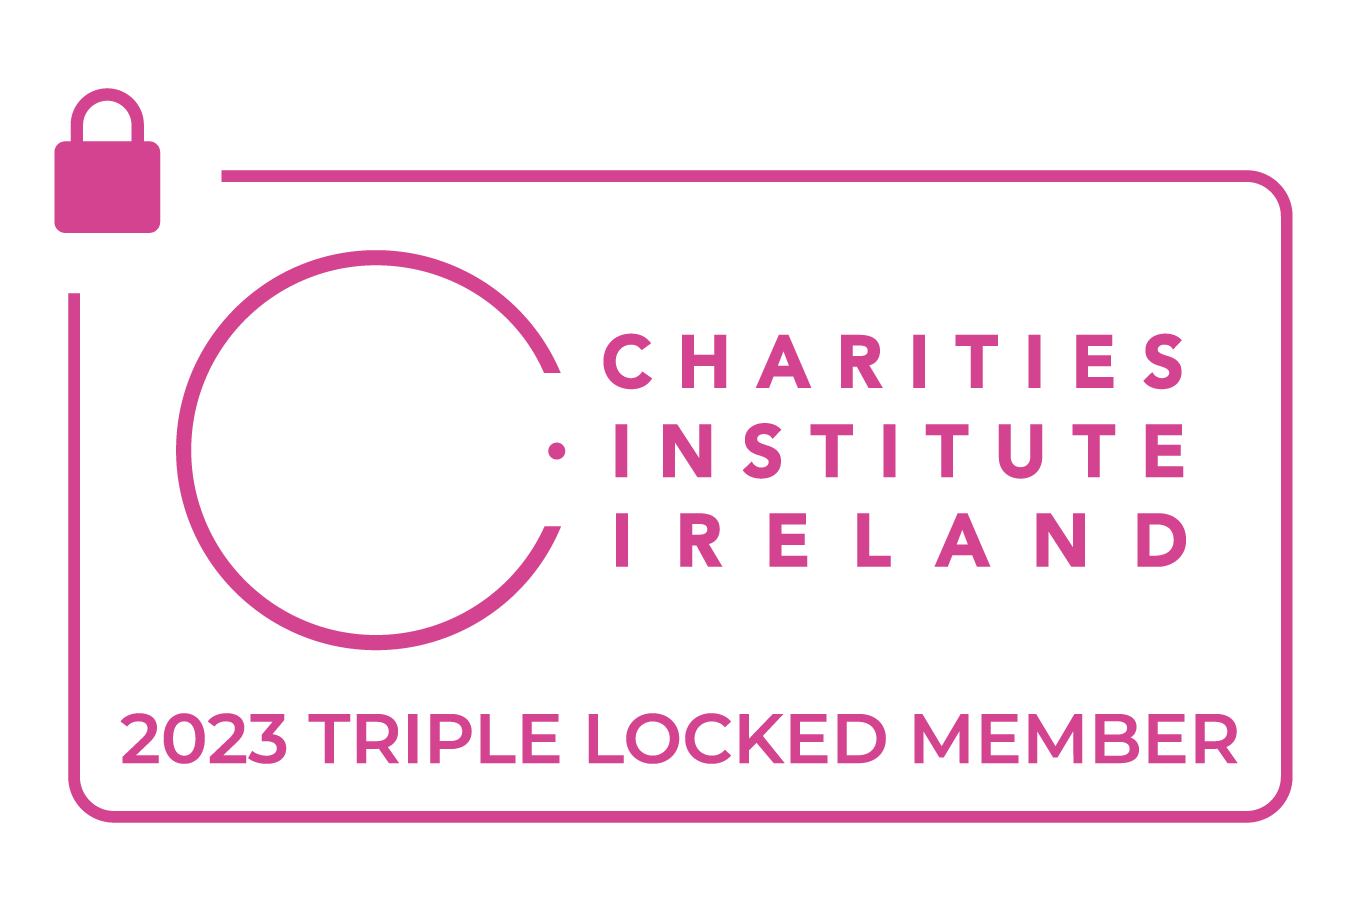 Charitable Institue Ireland